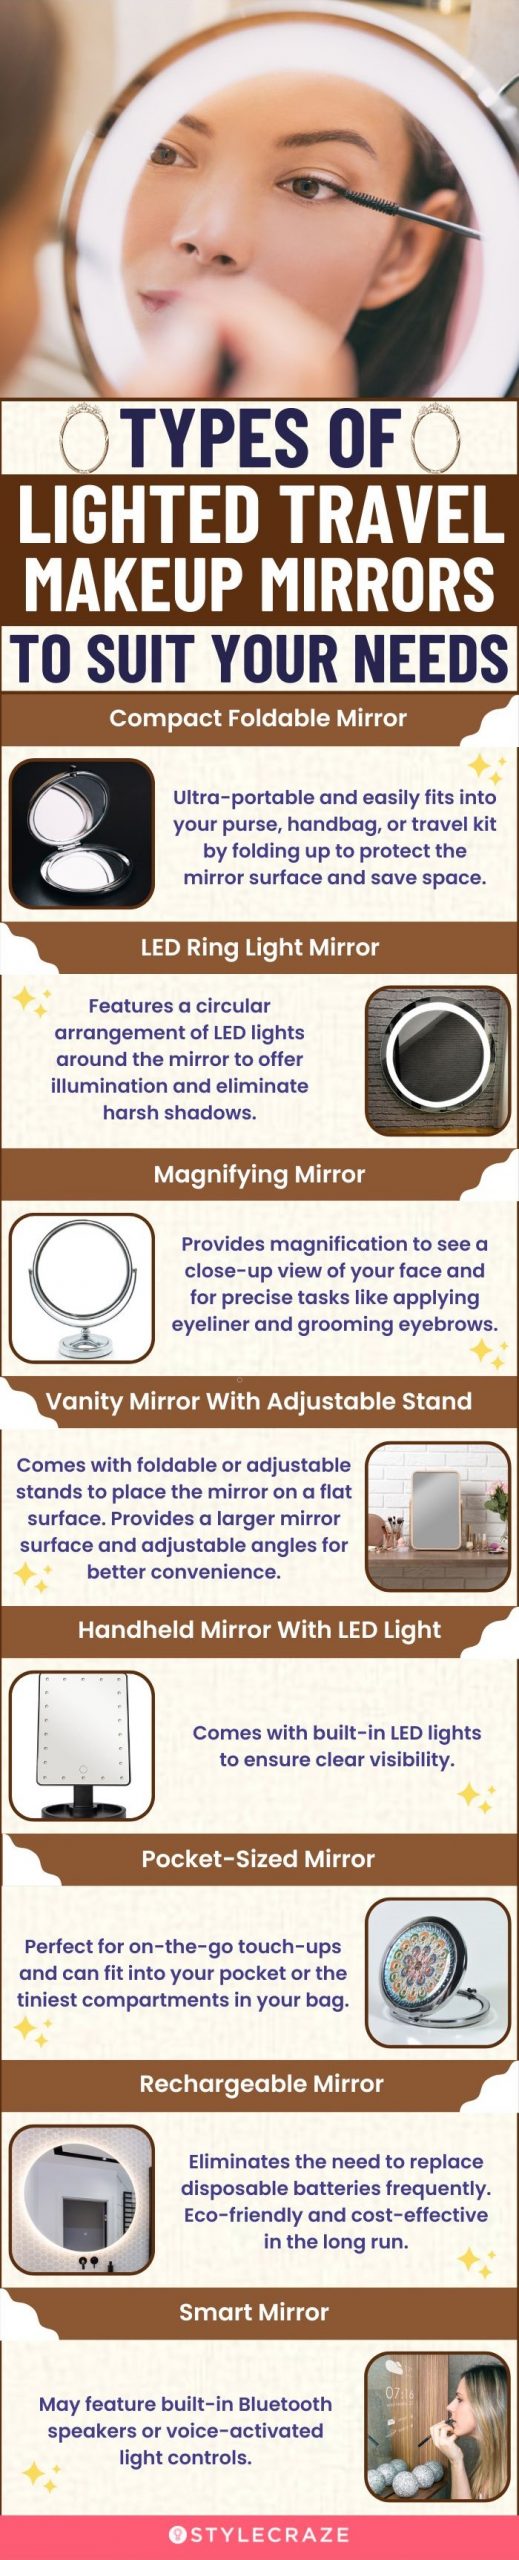 Portable Mini Makeup Mirror With Storage Box - Handheld, Foldable